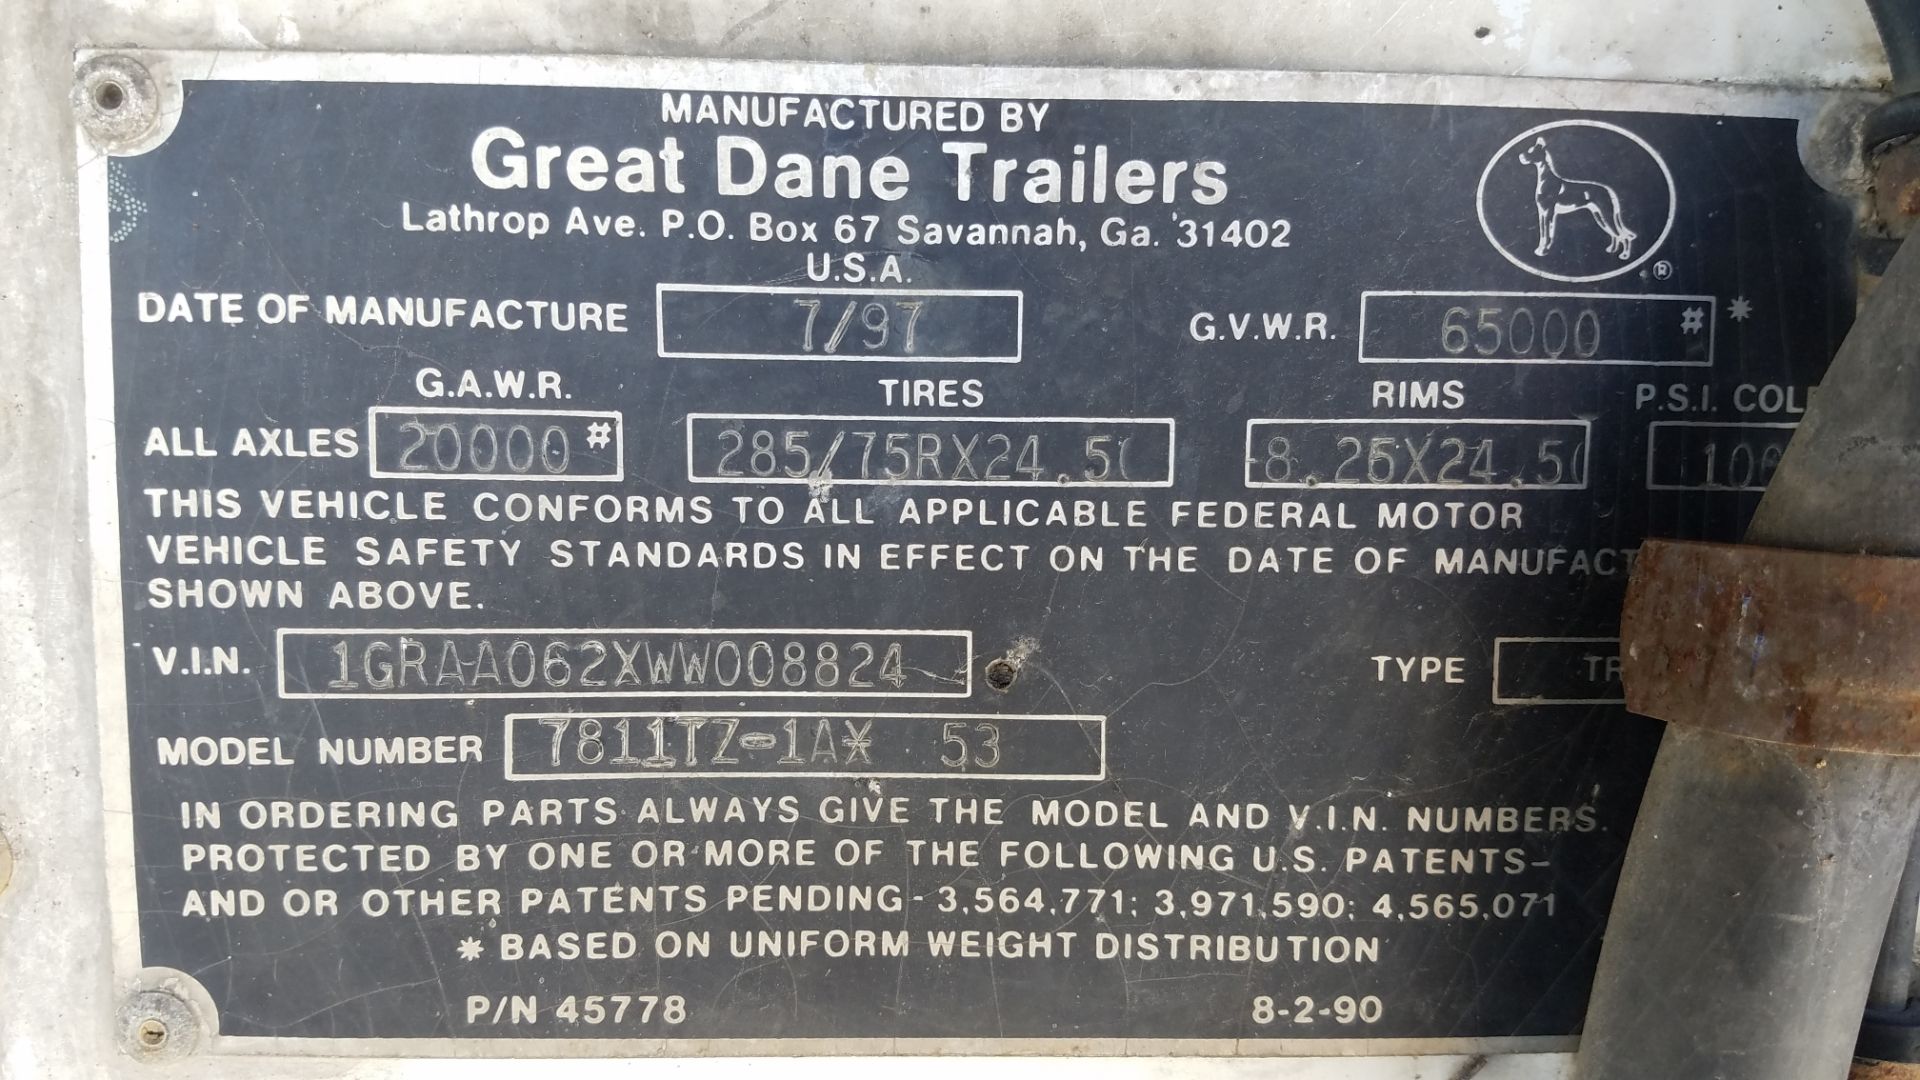 1997 Great Dane Refrigerated Semi Trailer Model 7811 TZ-1A 53, 53’, Carrier Ultrafresh 2 - Image 10 of 15